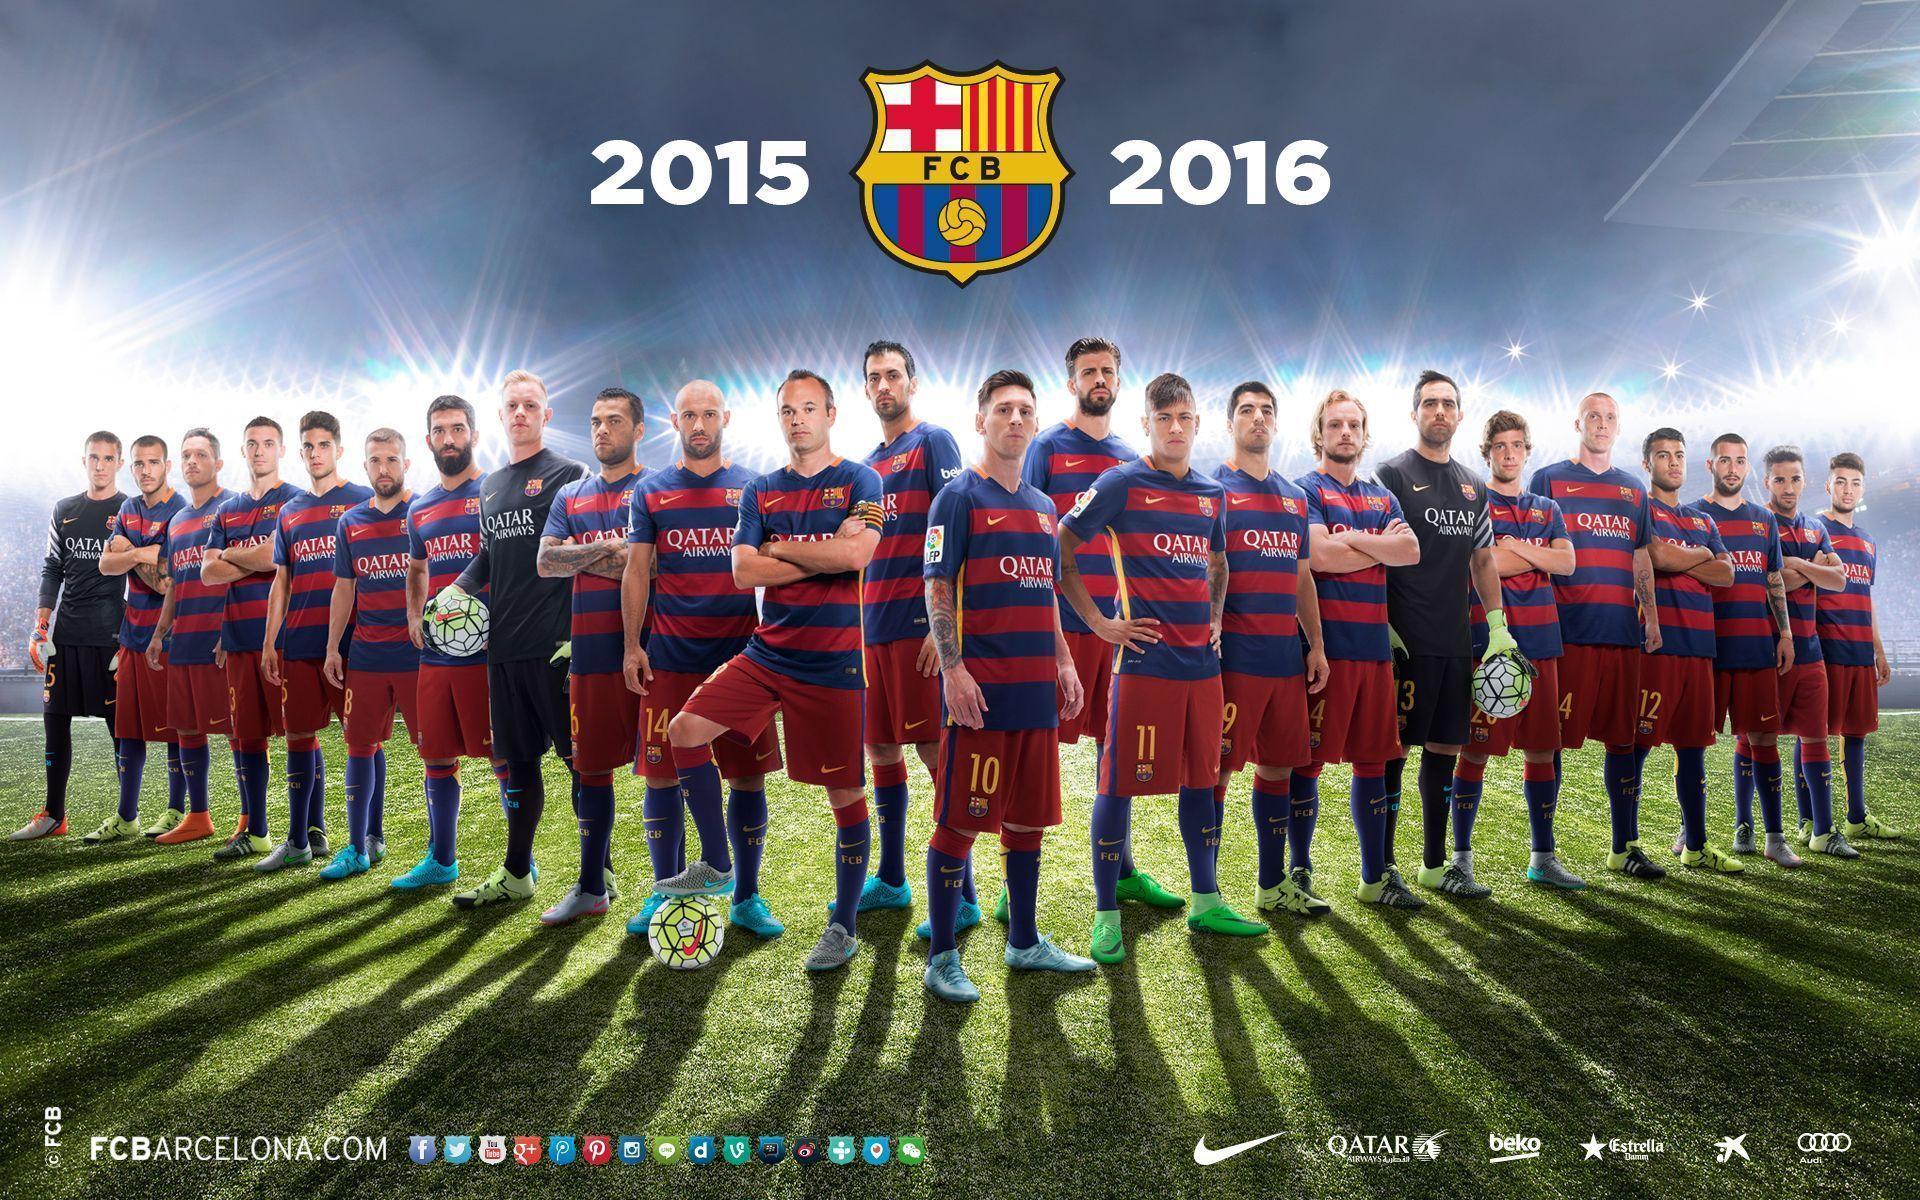 Free FC Barcelona Background. Wallpaper, Background, Image